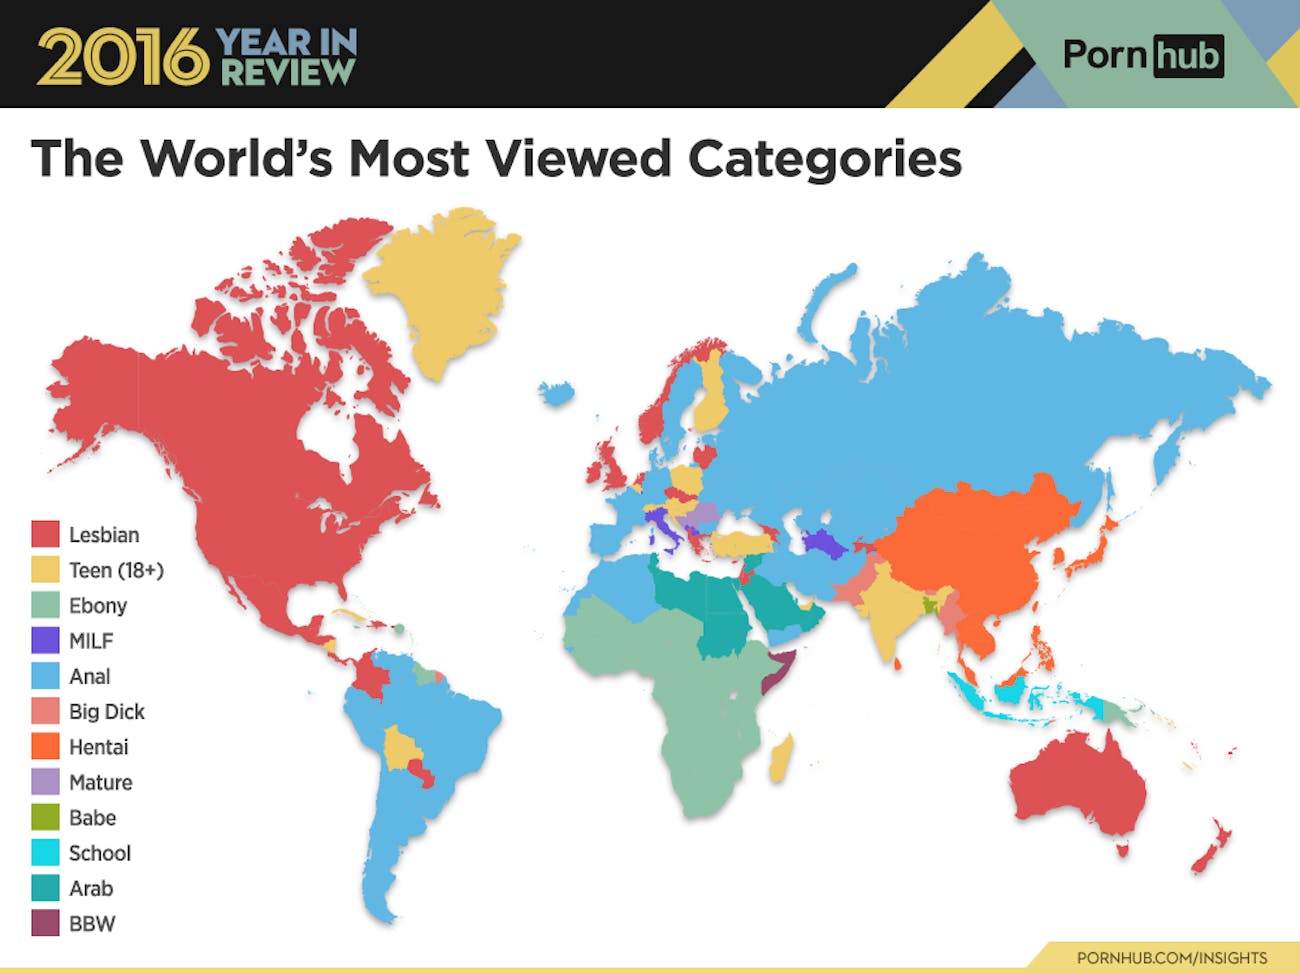 Lesbian Stepsister Pornhub - Pornhub Released a Detailed Map of the World's Porn ...